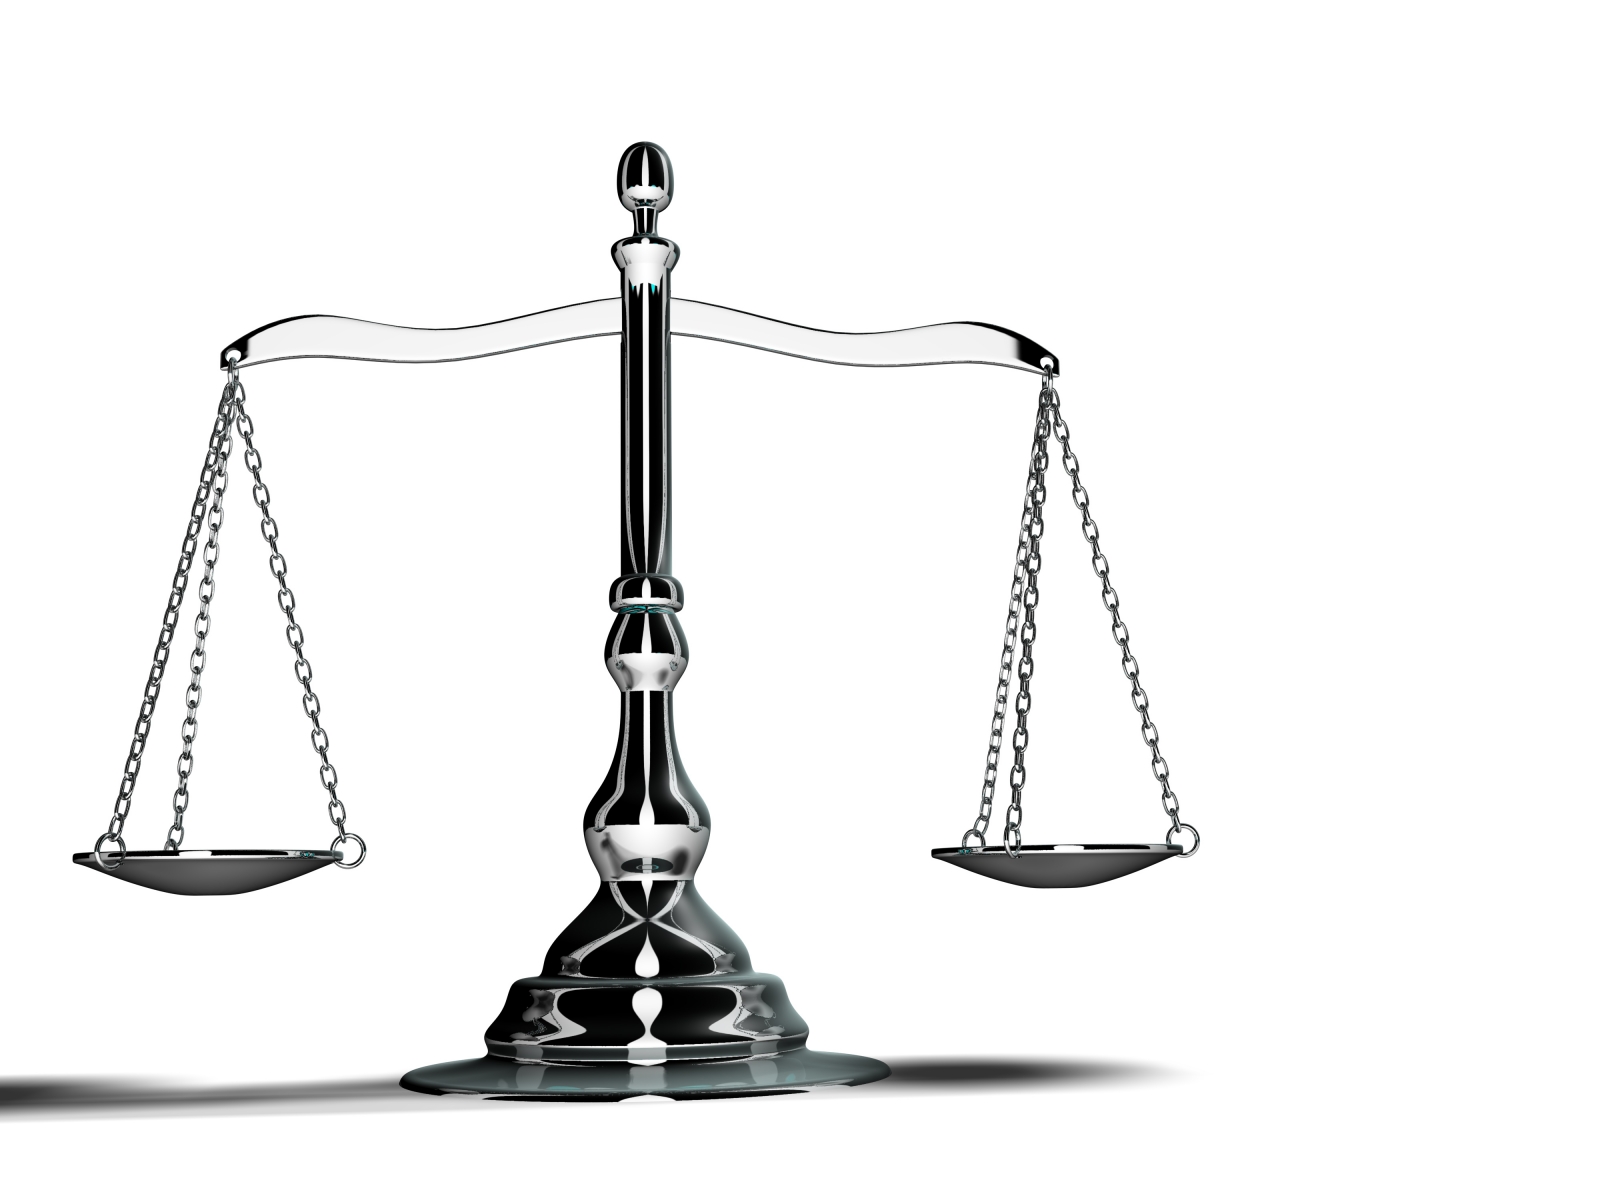 Arbitration: Follow Justice or Follow Law? | Law.com